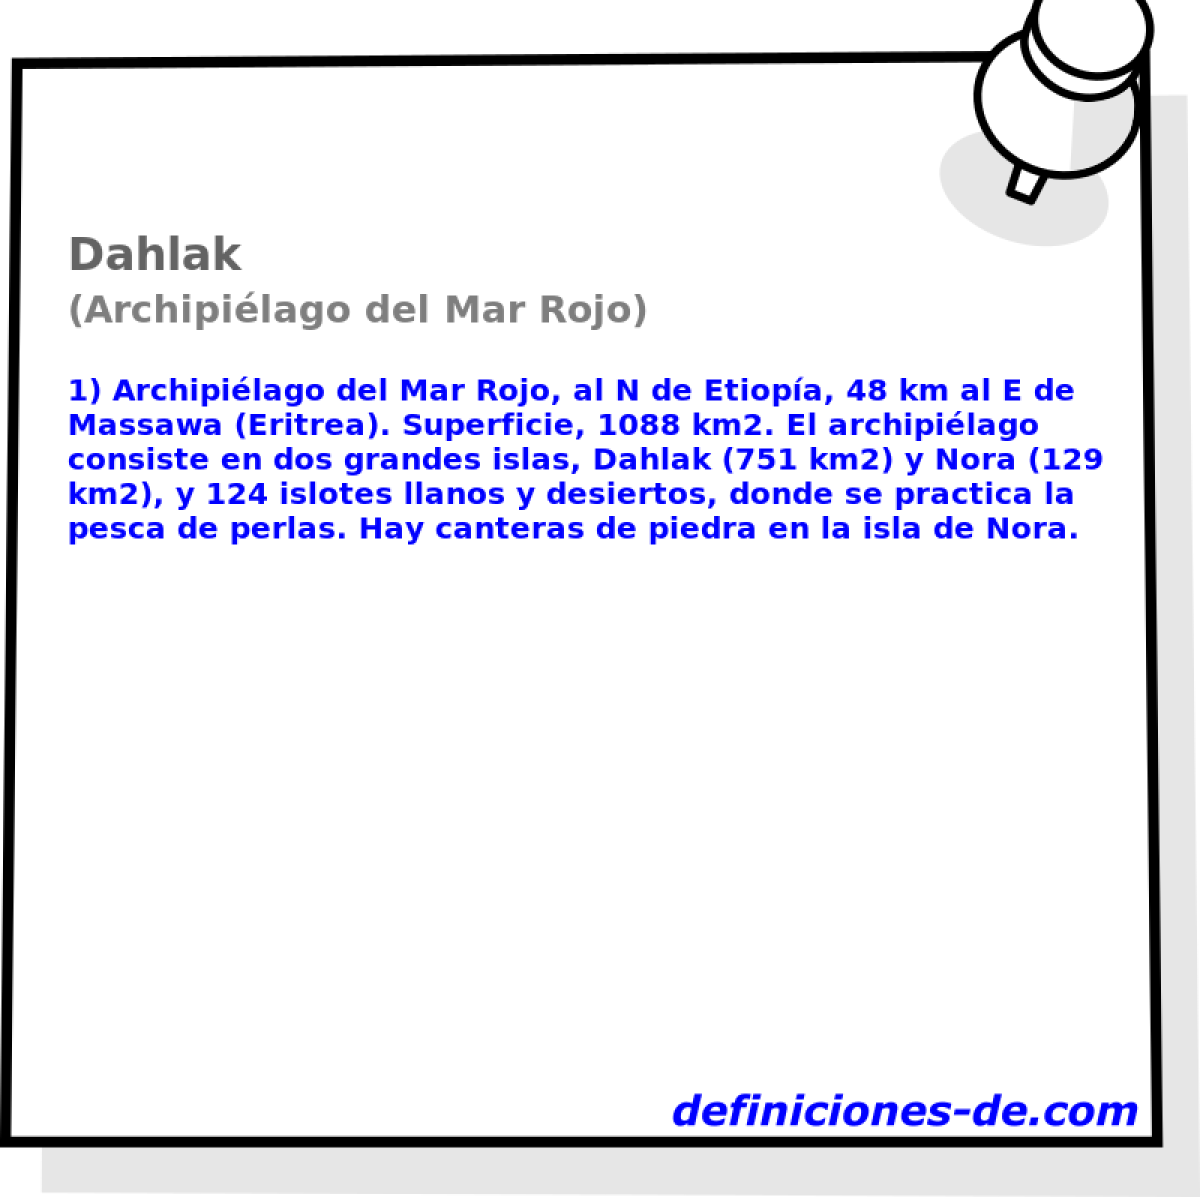 Dahlak (Archipilago del Mar Rojo)